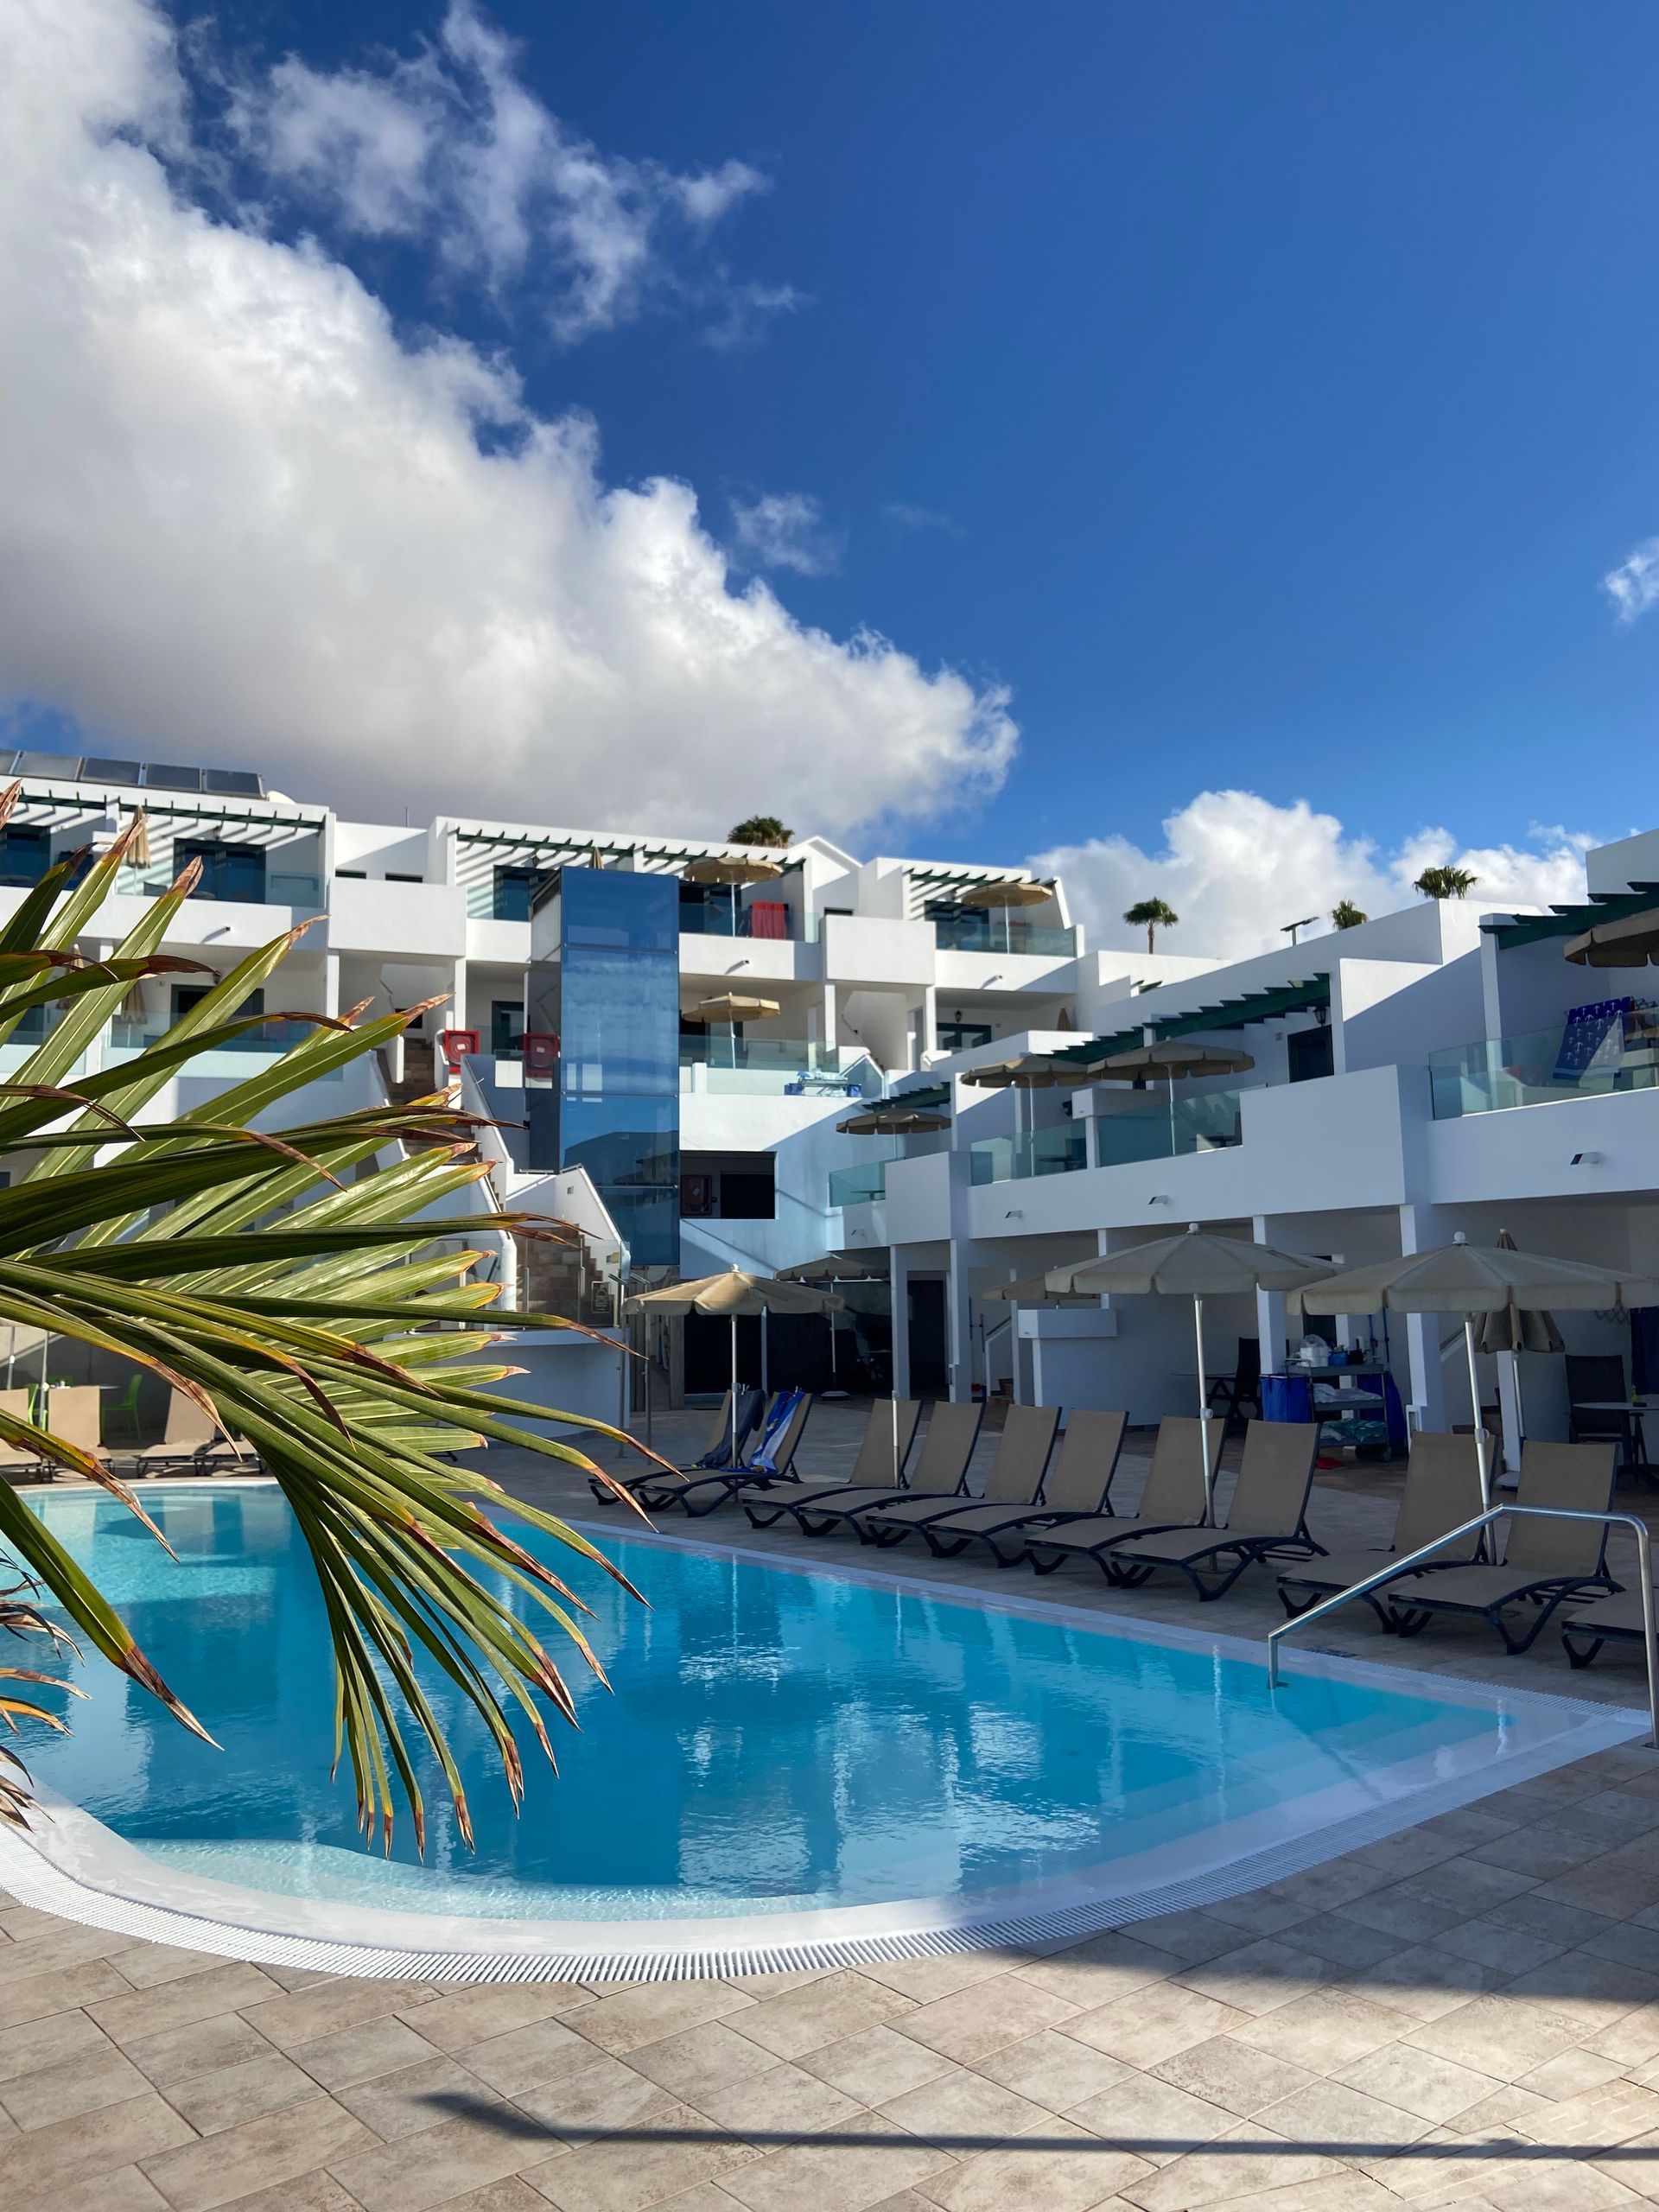 Self-catering apartments in Lanzarote Villa Canaima